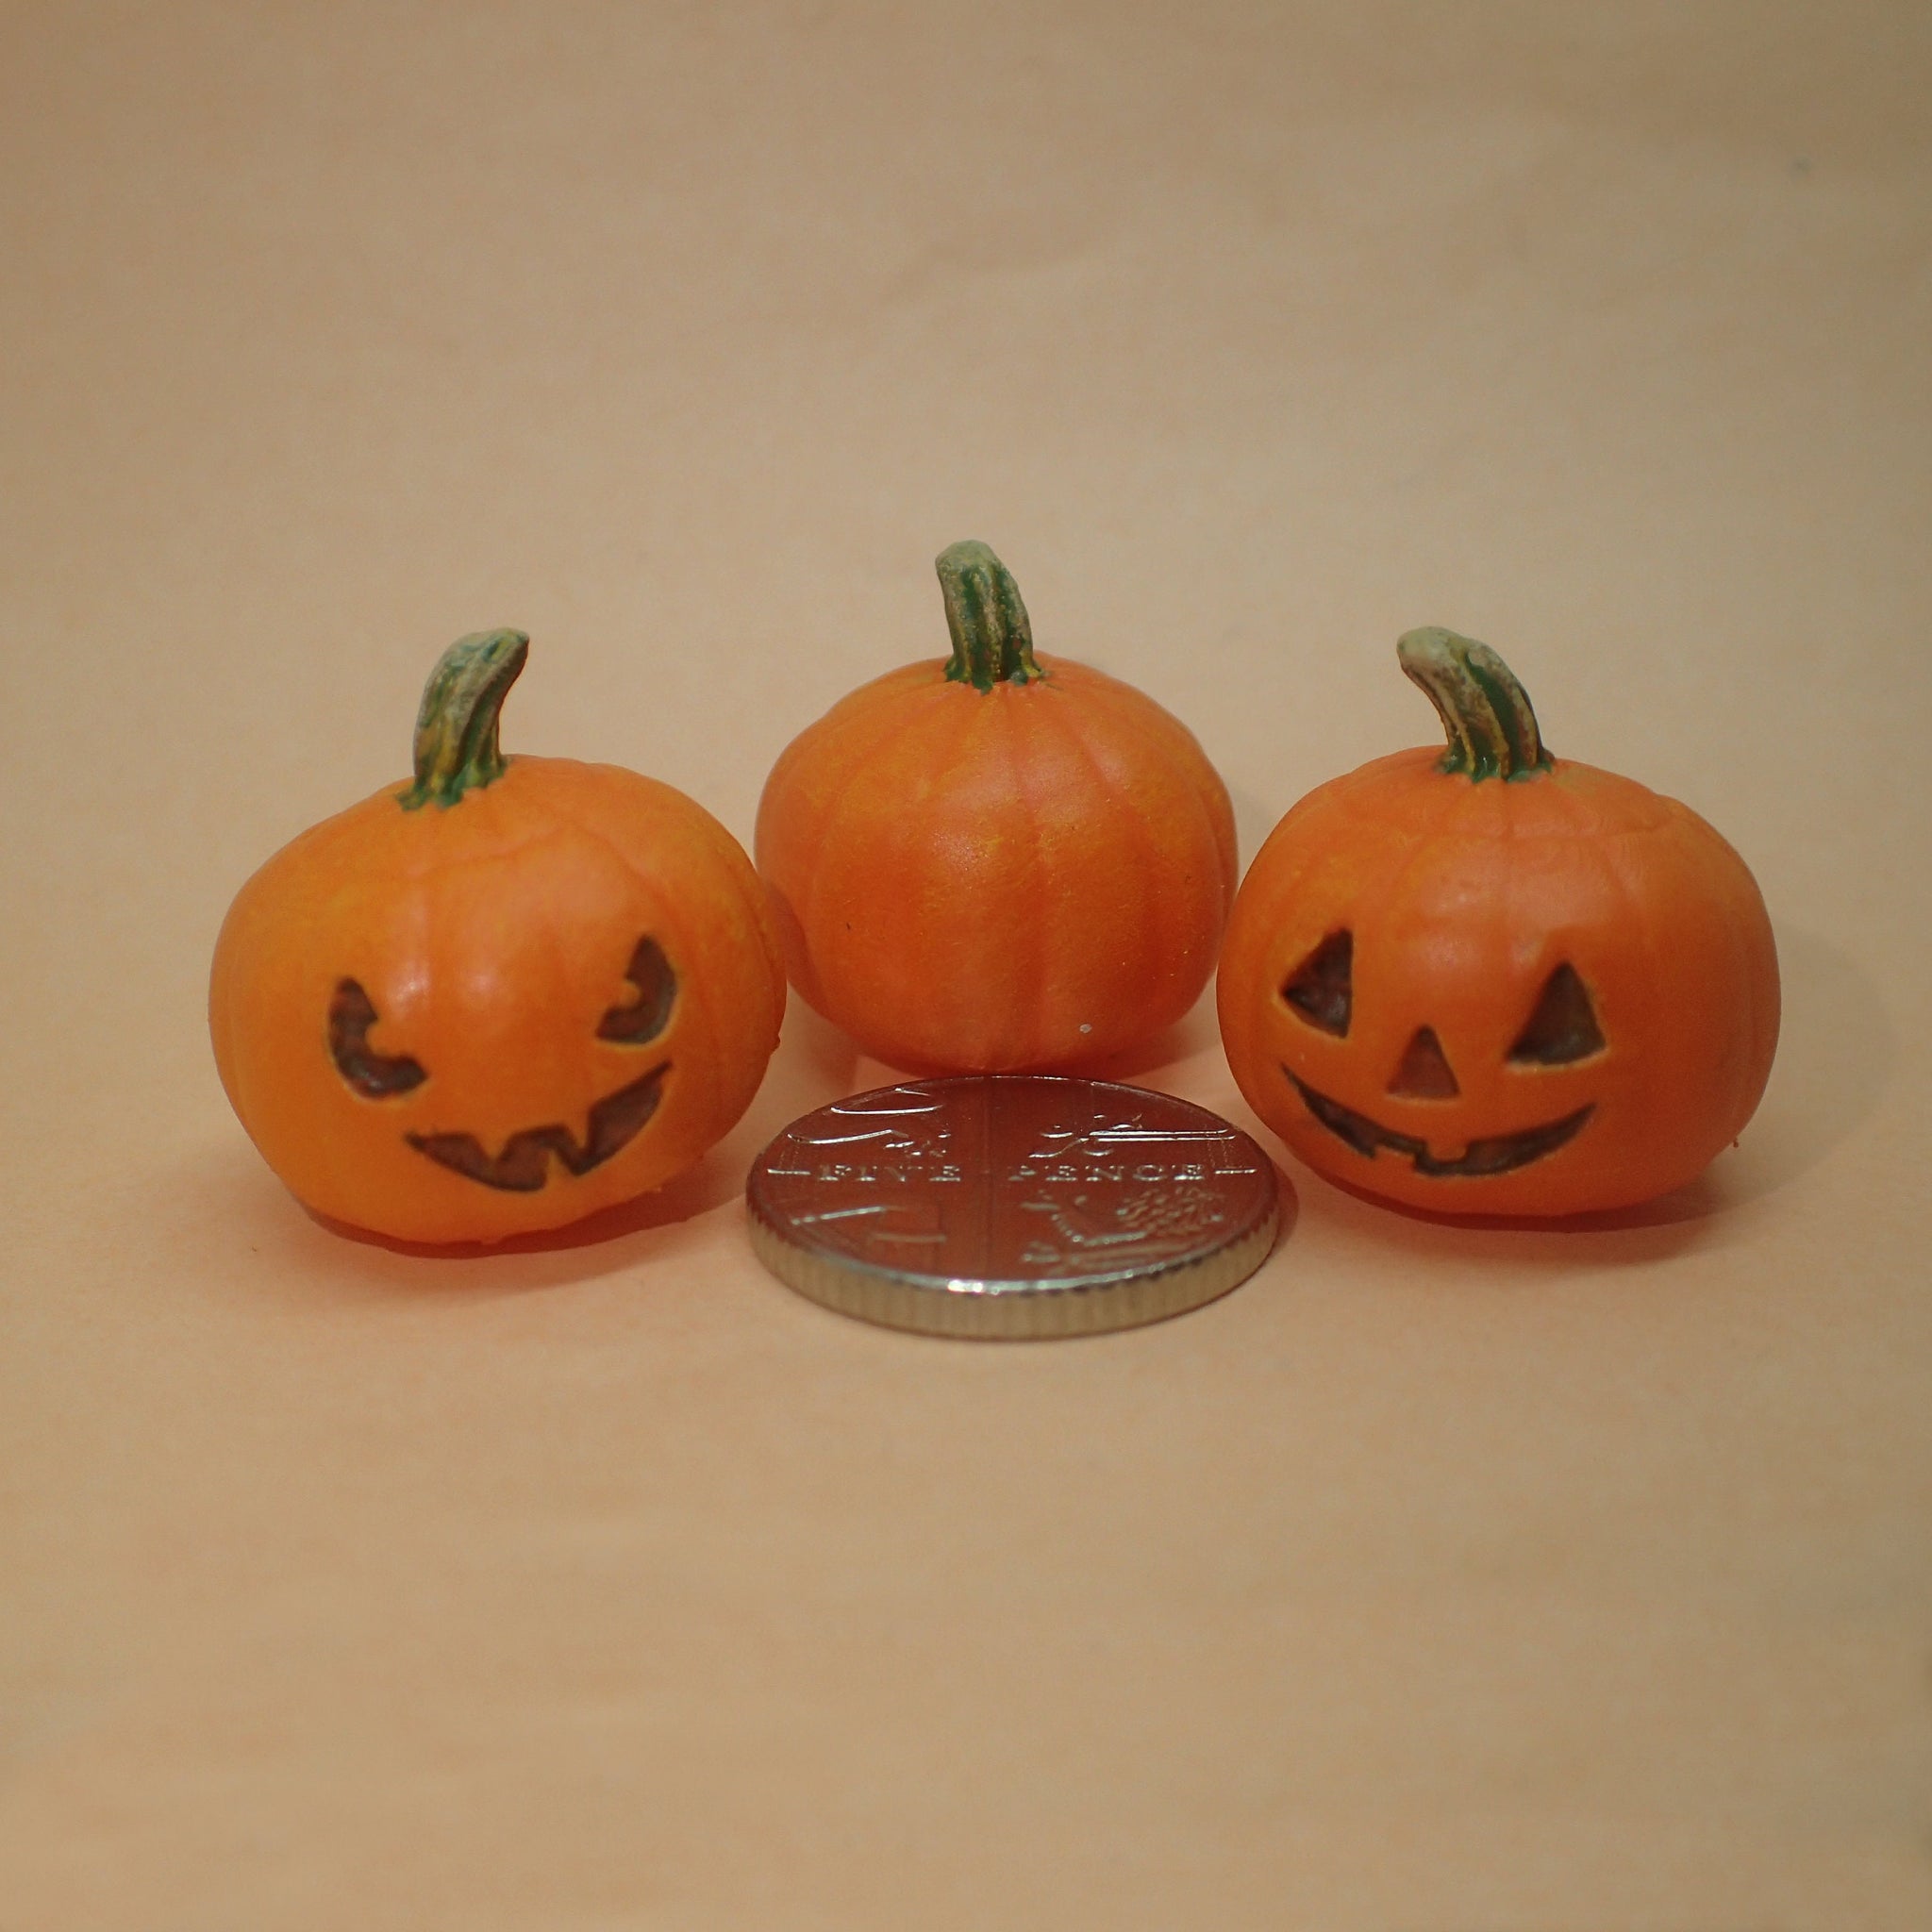 Spooky tiny Halloween pumpkins! 1/24th scale